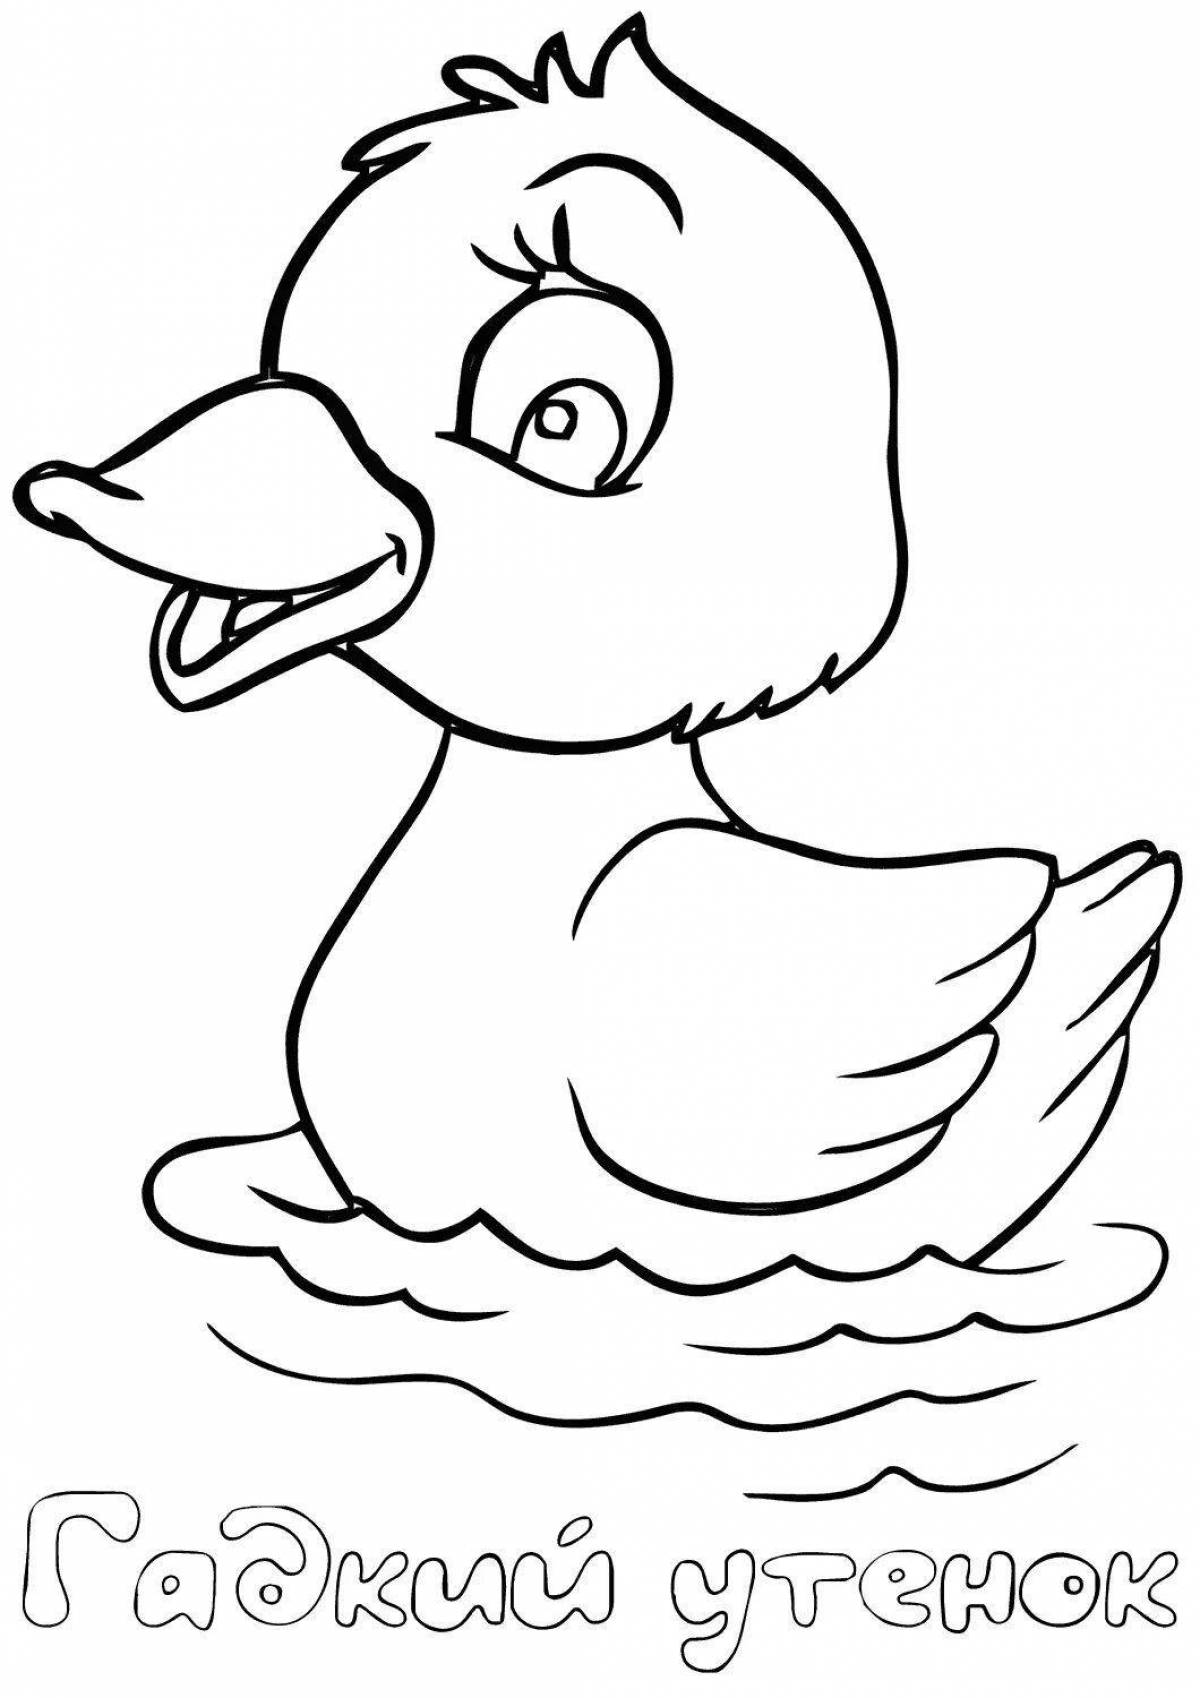 Coloring page adorable Lalanfant duck